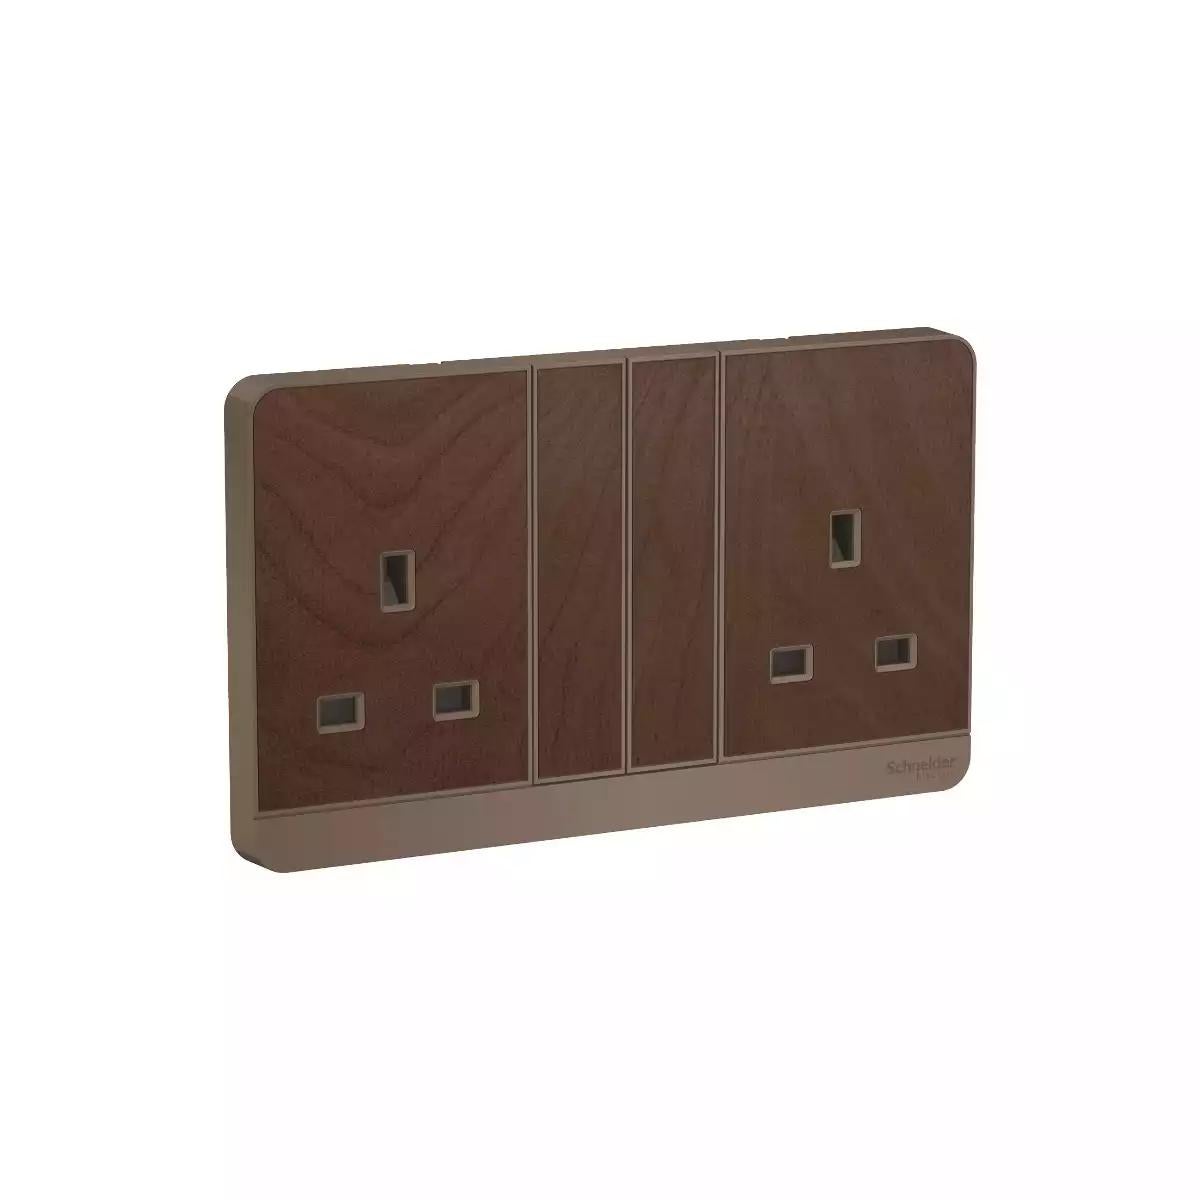 AvatarOn, 2 switched socket, 3P, 13 A, 250 V, Wood